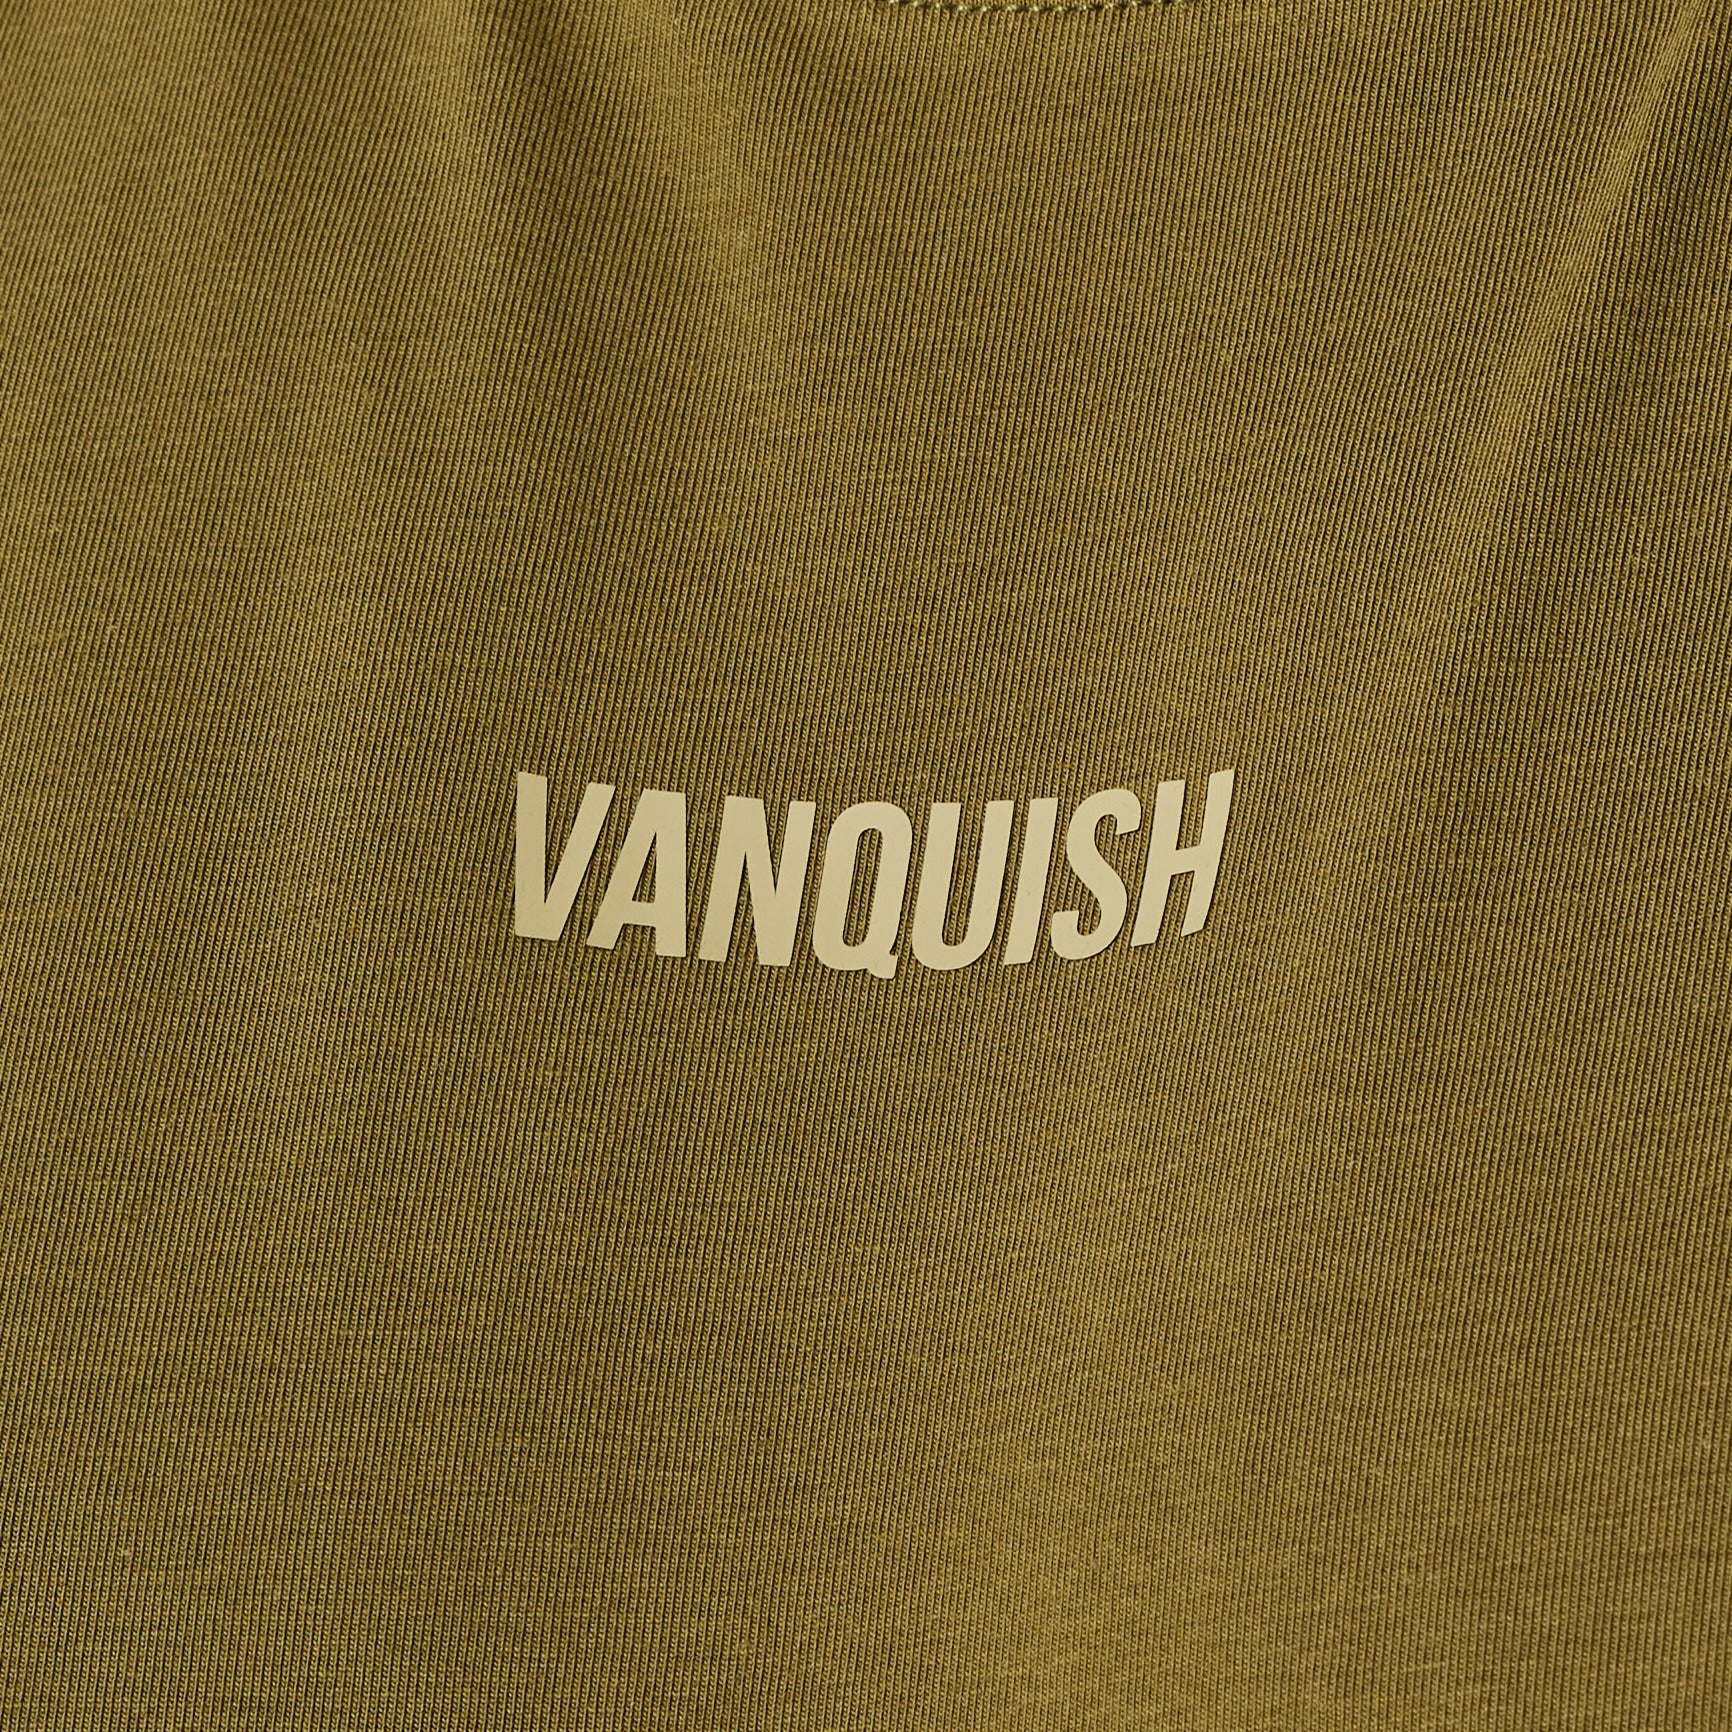 Vanquish Essential Olive Green Oversized Sleeveless T Shirt